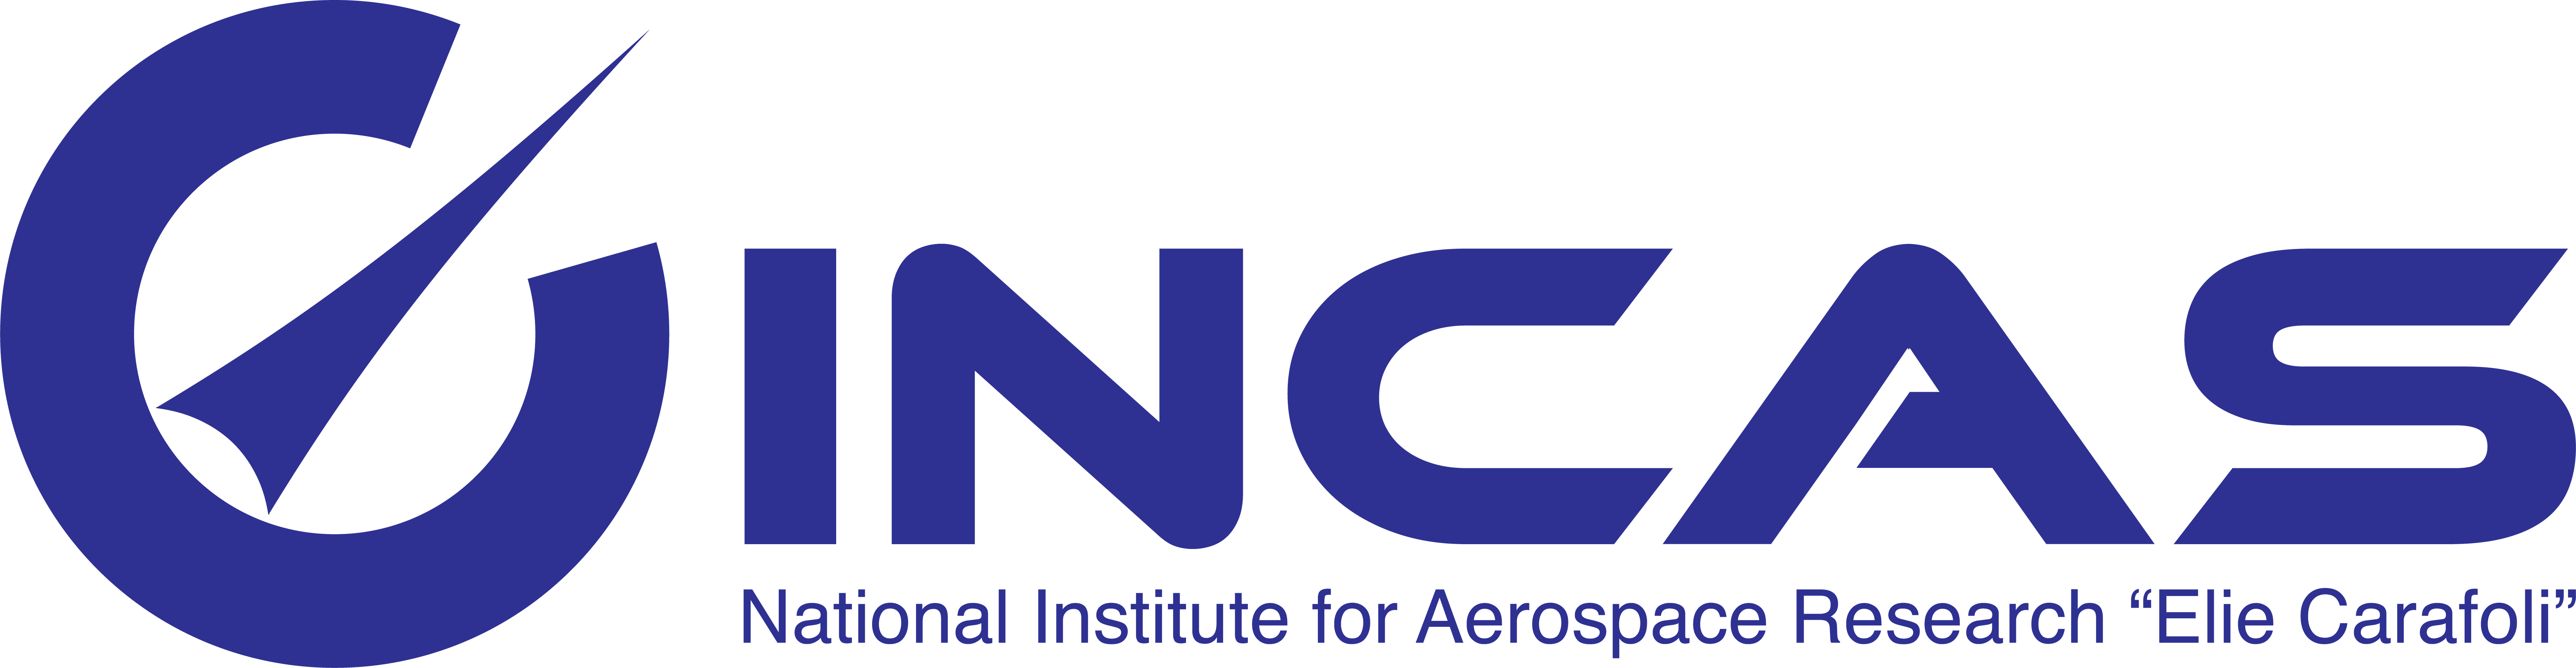 INCAS - National Institute for Aerospace Research “Elie Carafoli” logo